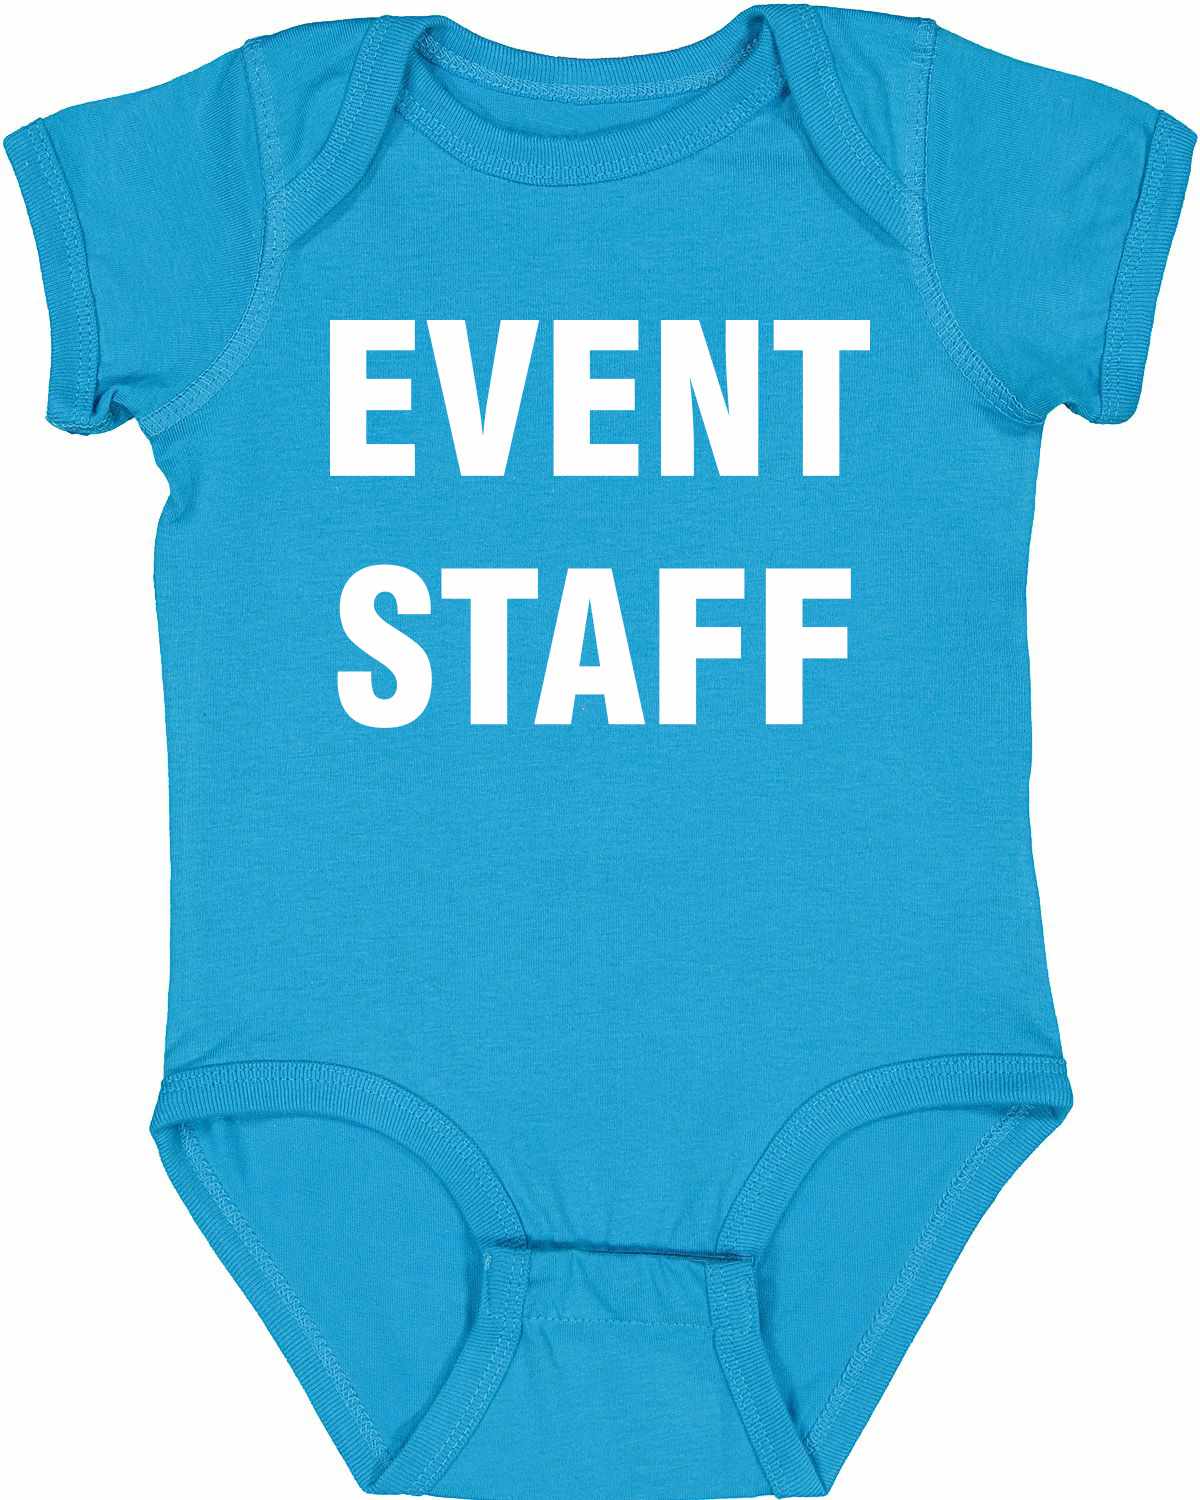 EVENT STAFF on Infant BodySuit (#399-10)